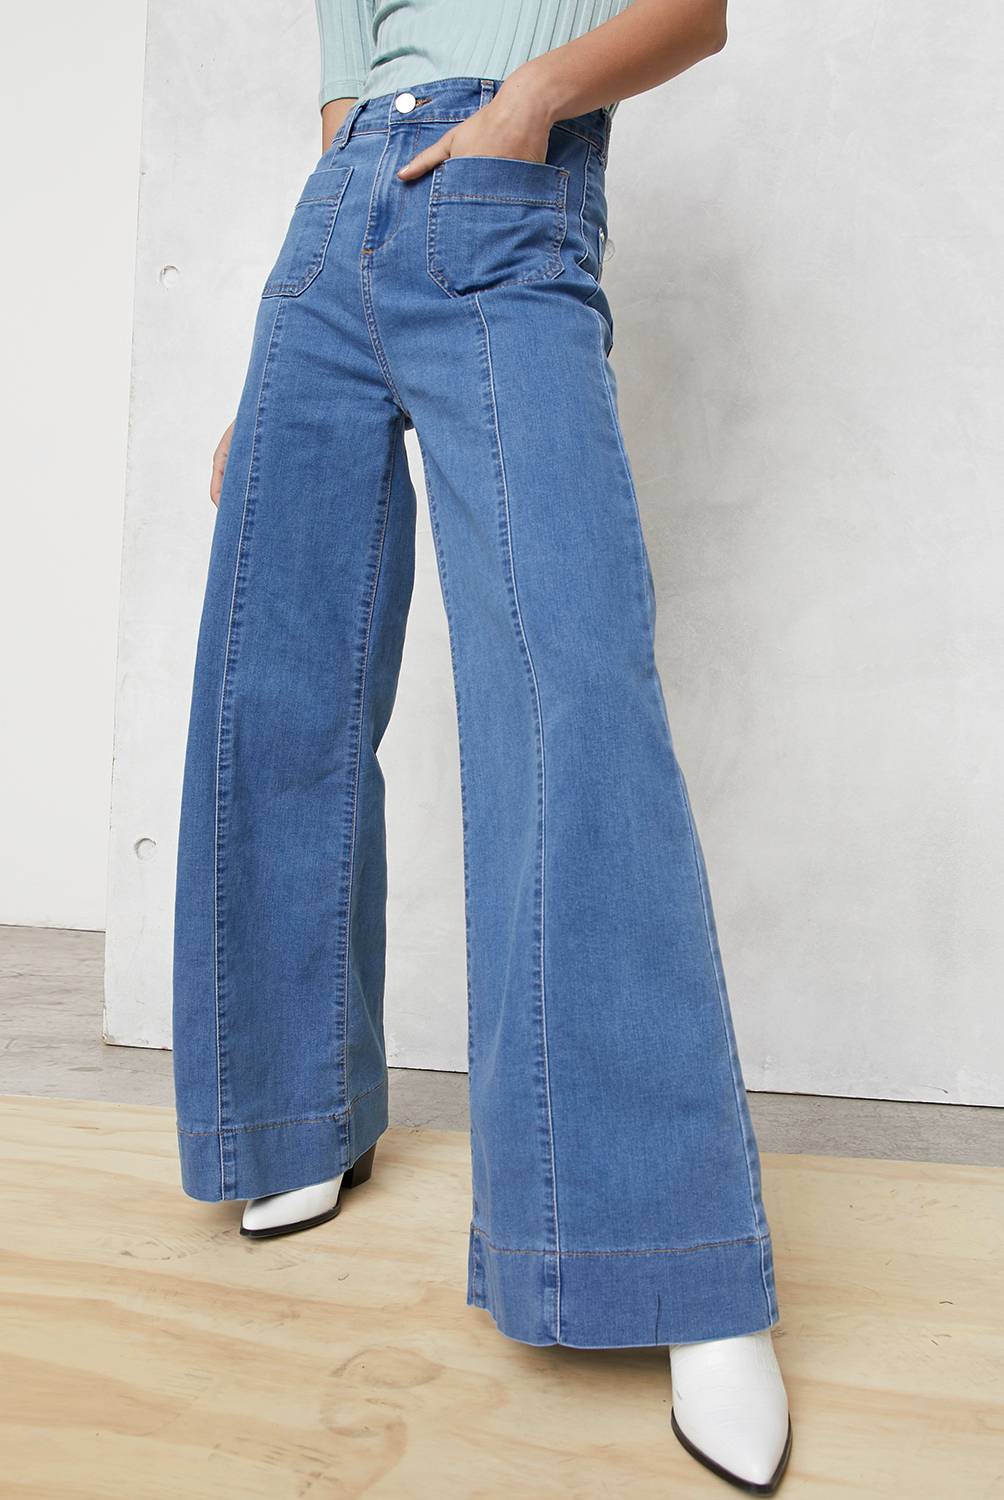 BASEMENT - Jeans leggins tiro alto mujer